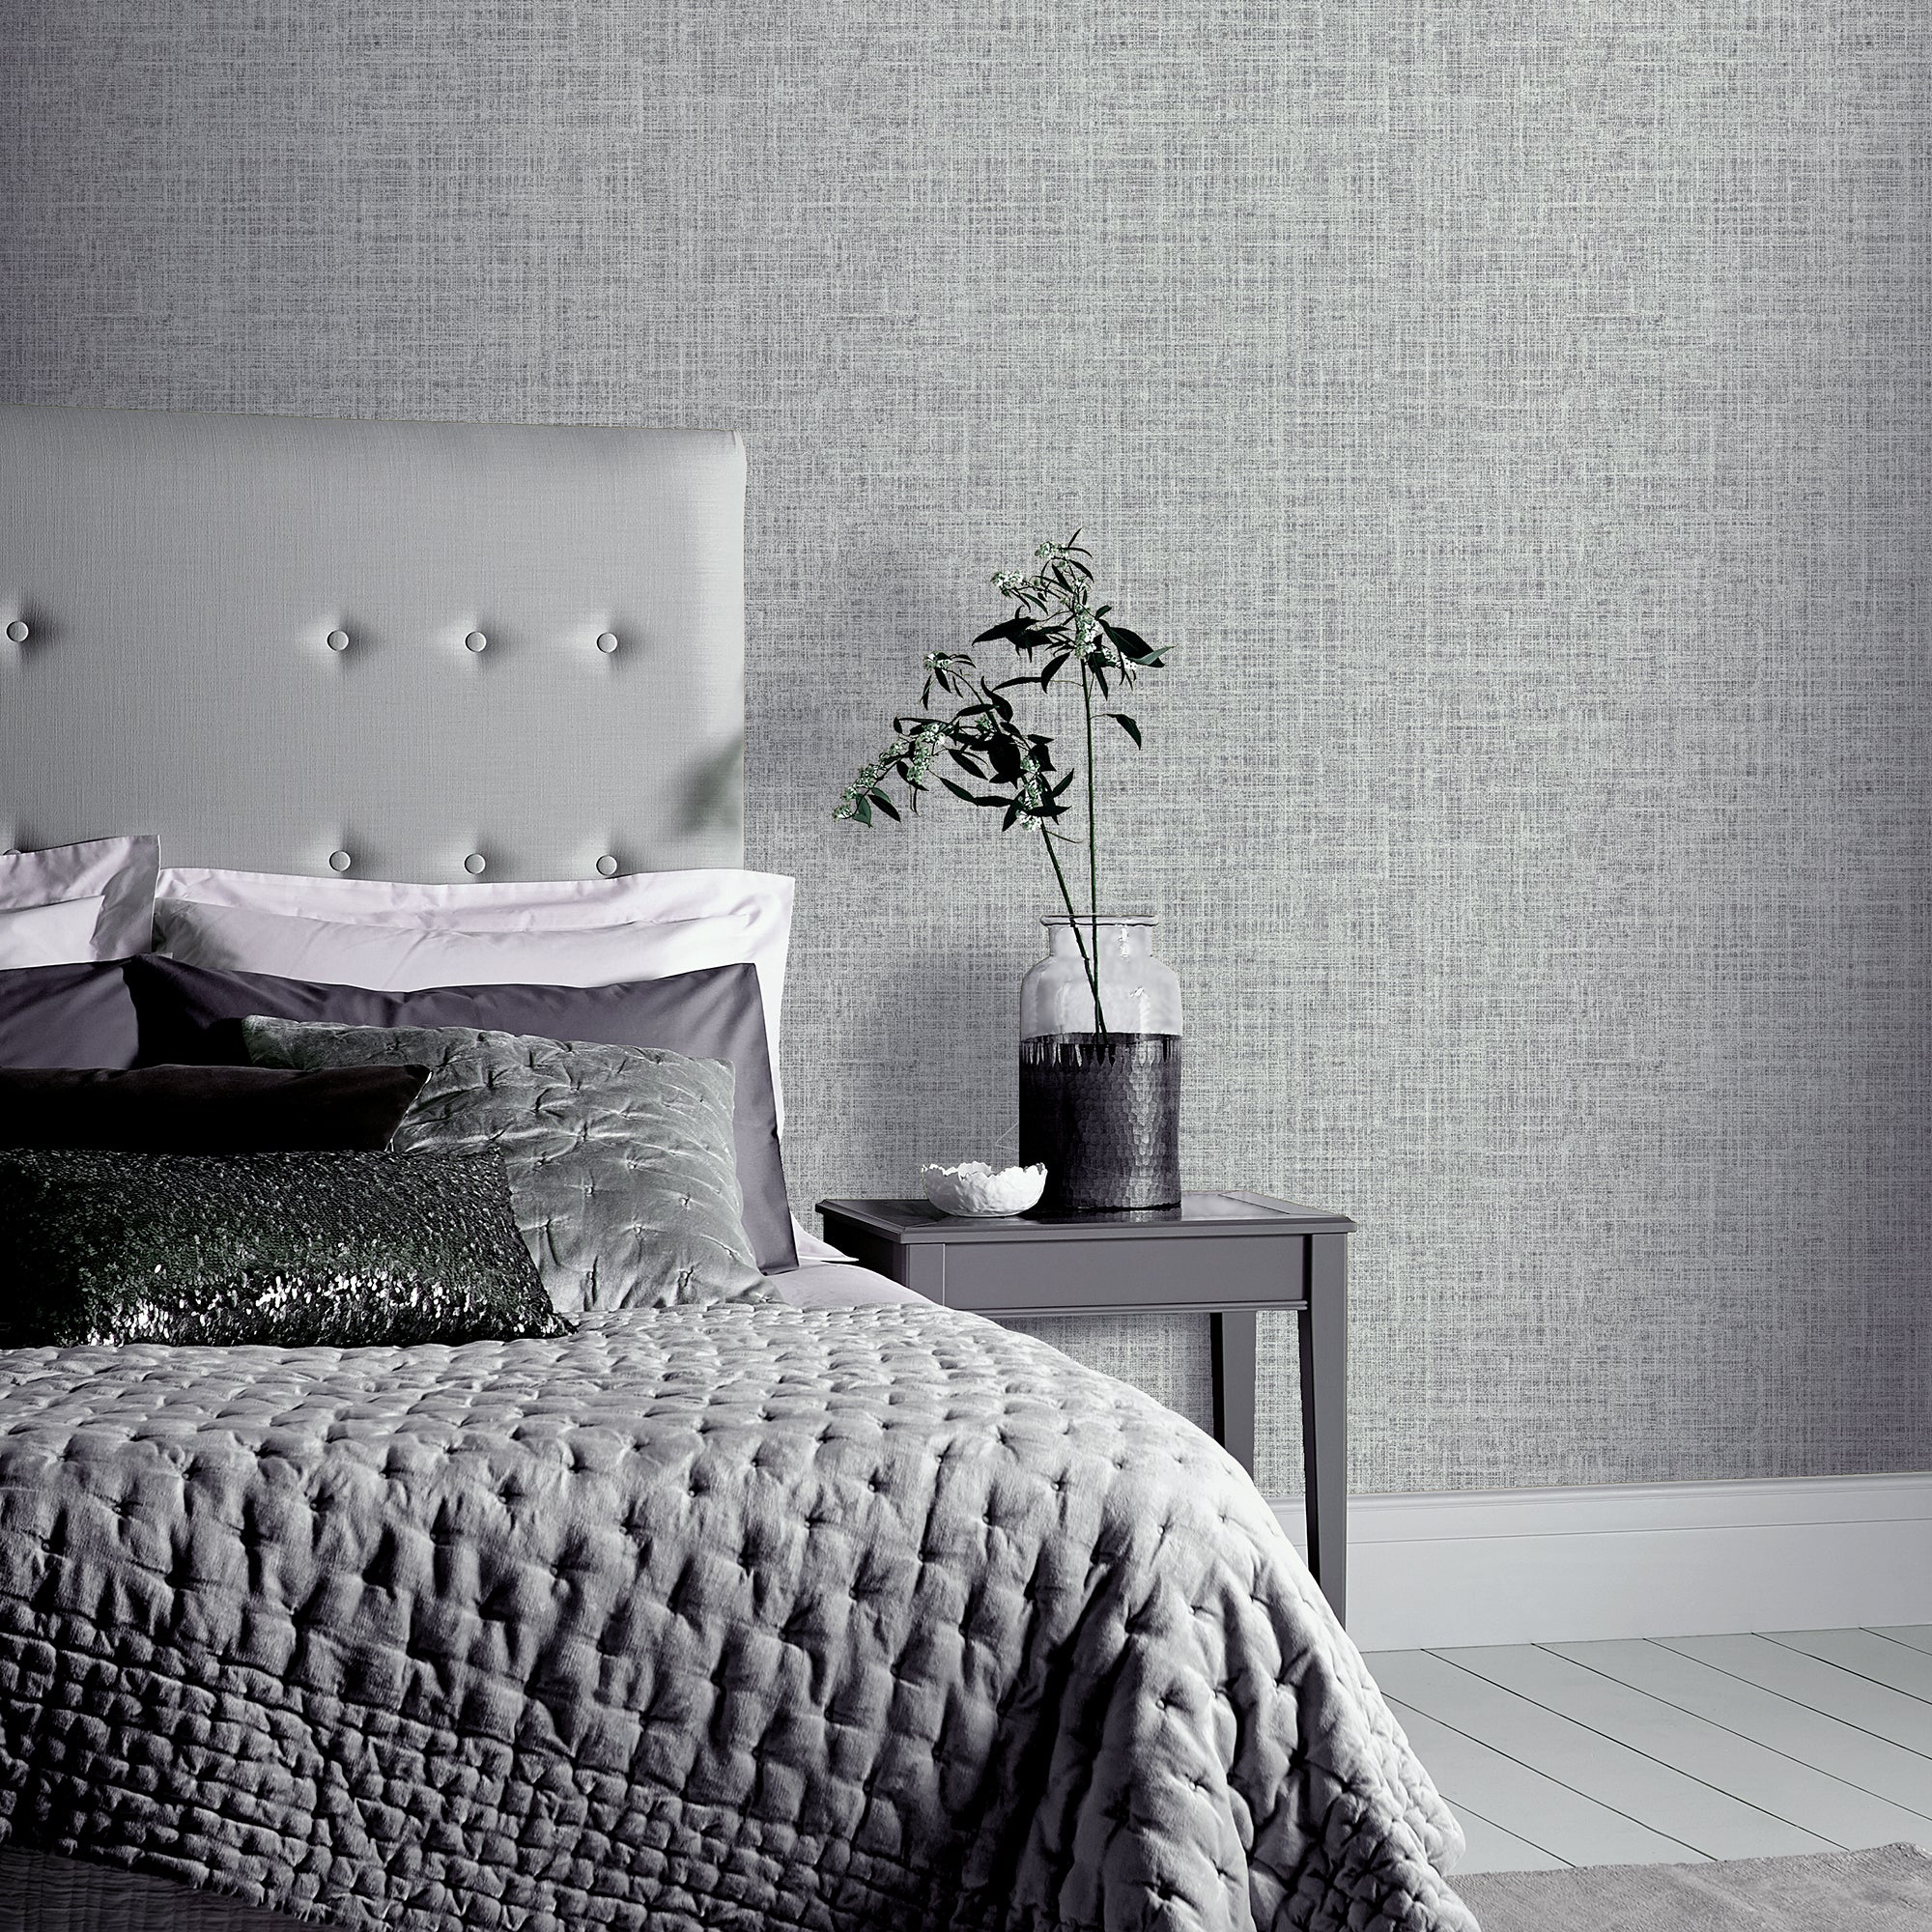 Luxe Hessian Mid Grey Wallpaper